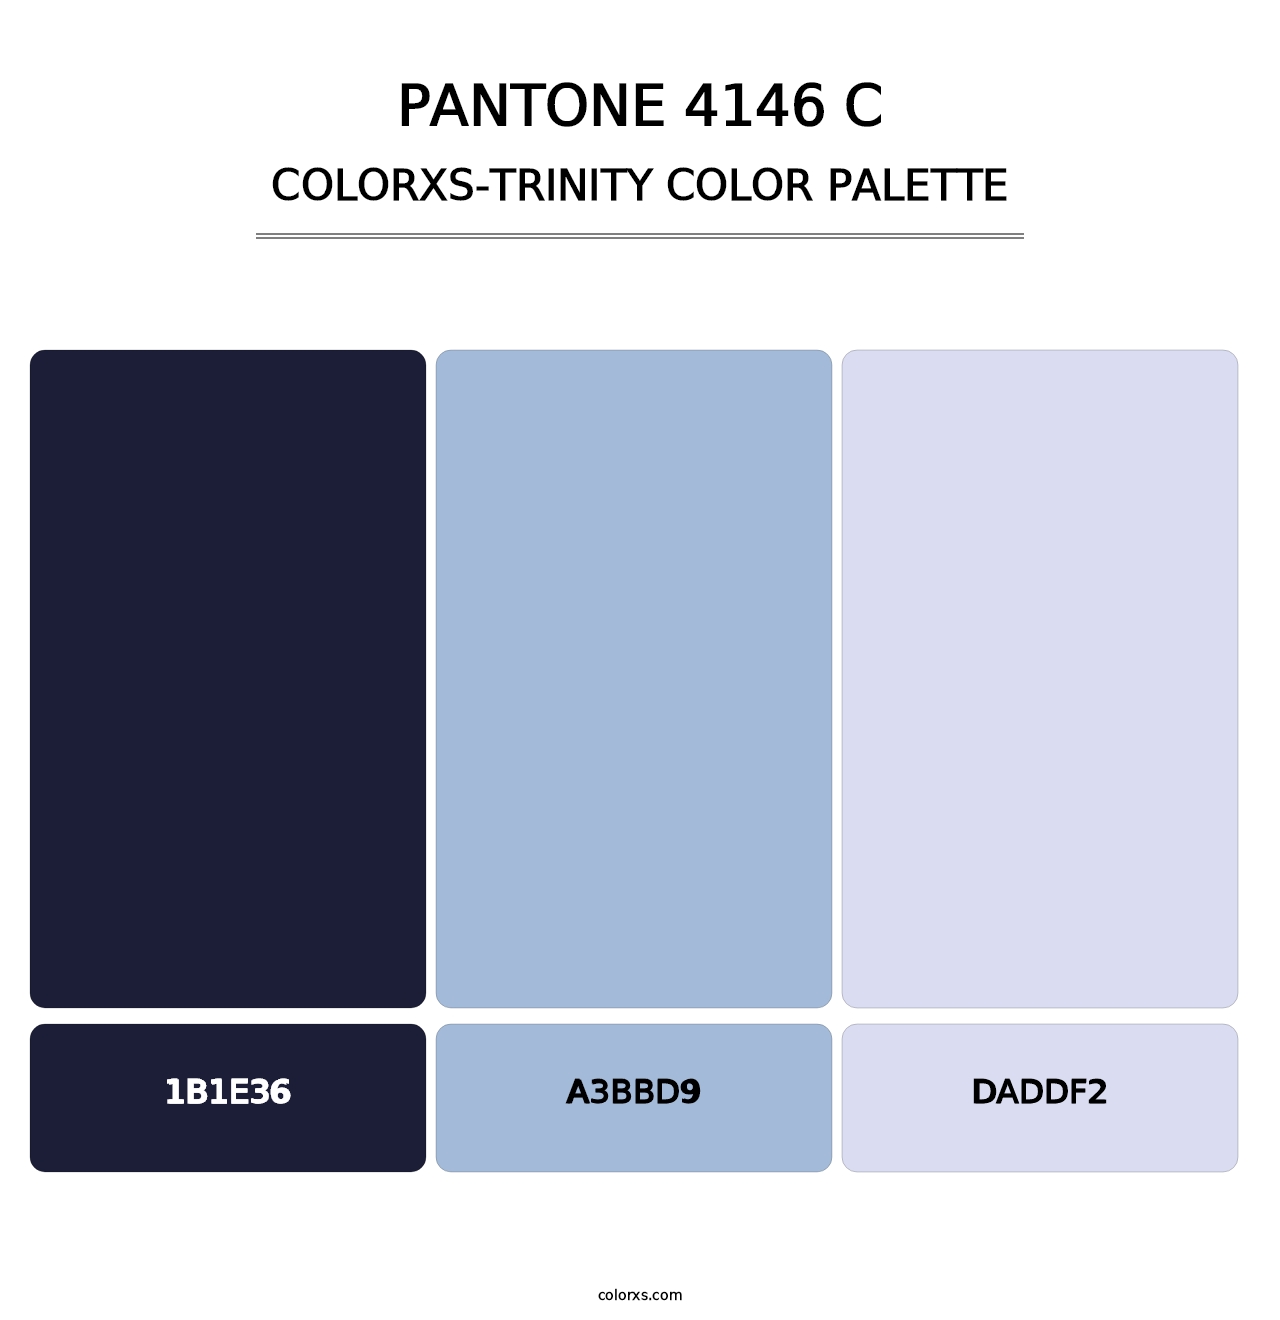 PANTONE 4146 C - Colorxs Trinity Palette